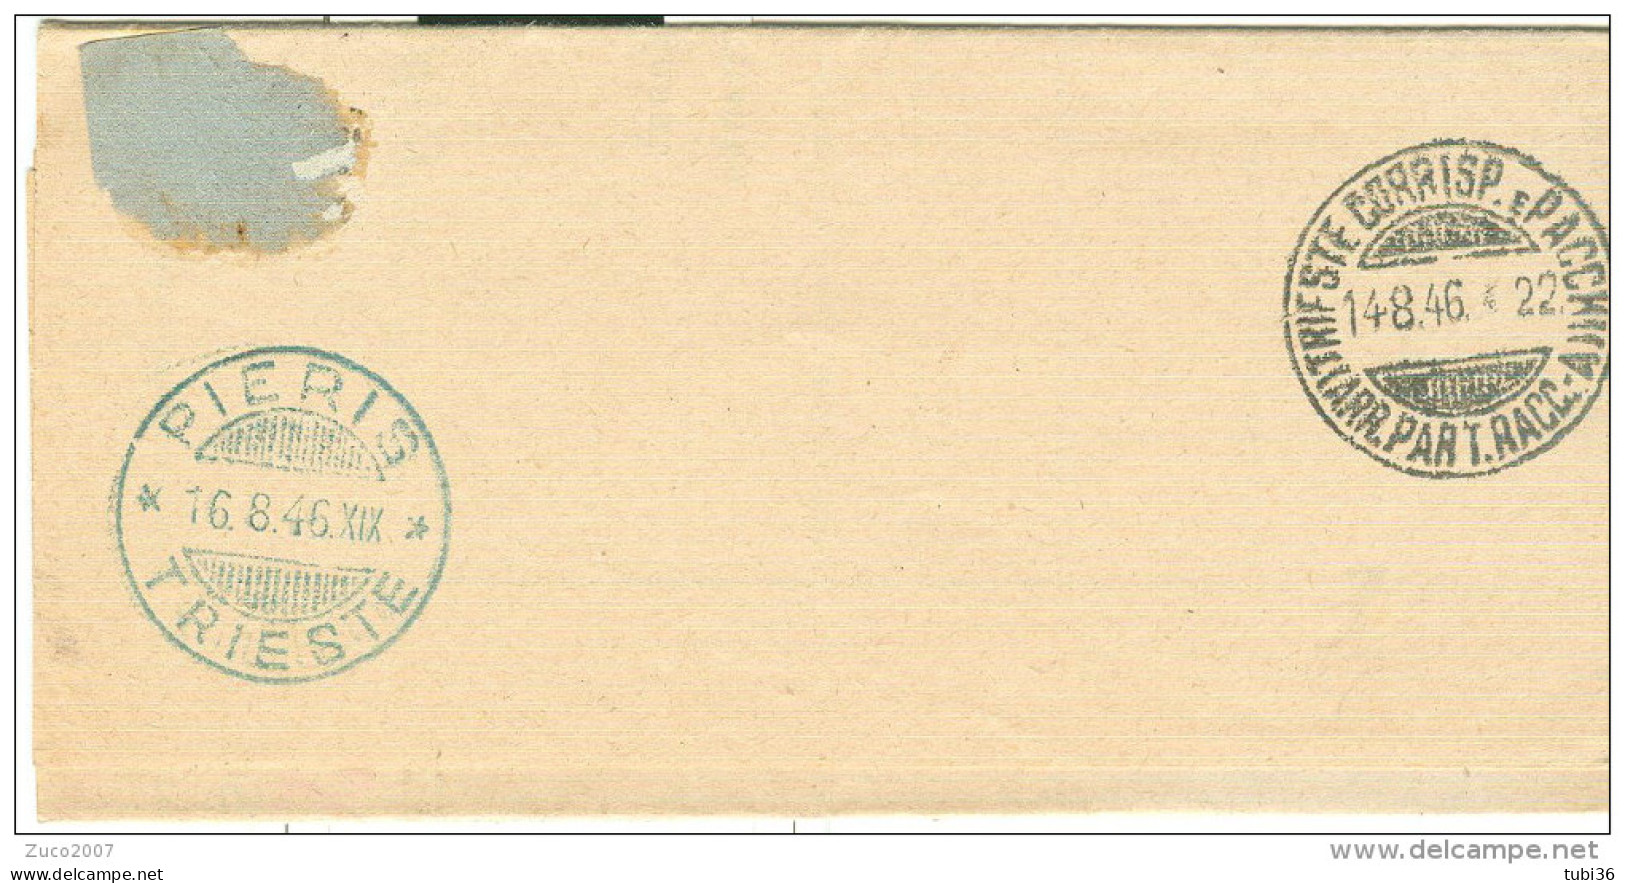 AMG-VG, IMP. £.10,VARIETA SOPRASTAMPA SPOSTATA ISOLATO IN TARIFFA MANO. RACC., 1946, POSTE MONFALCONE -PIERIS, TRIESTE - Marcophilie